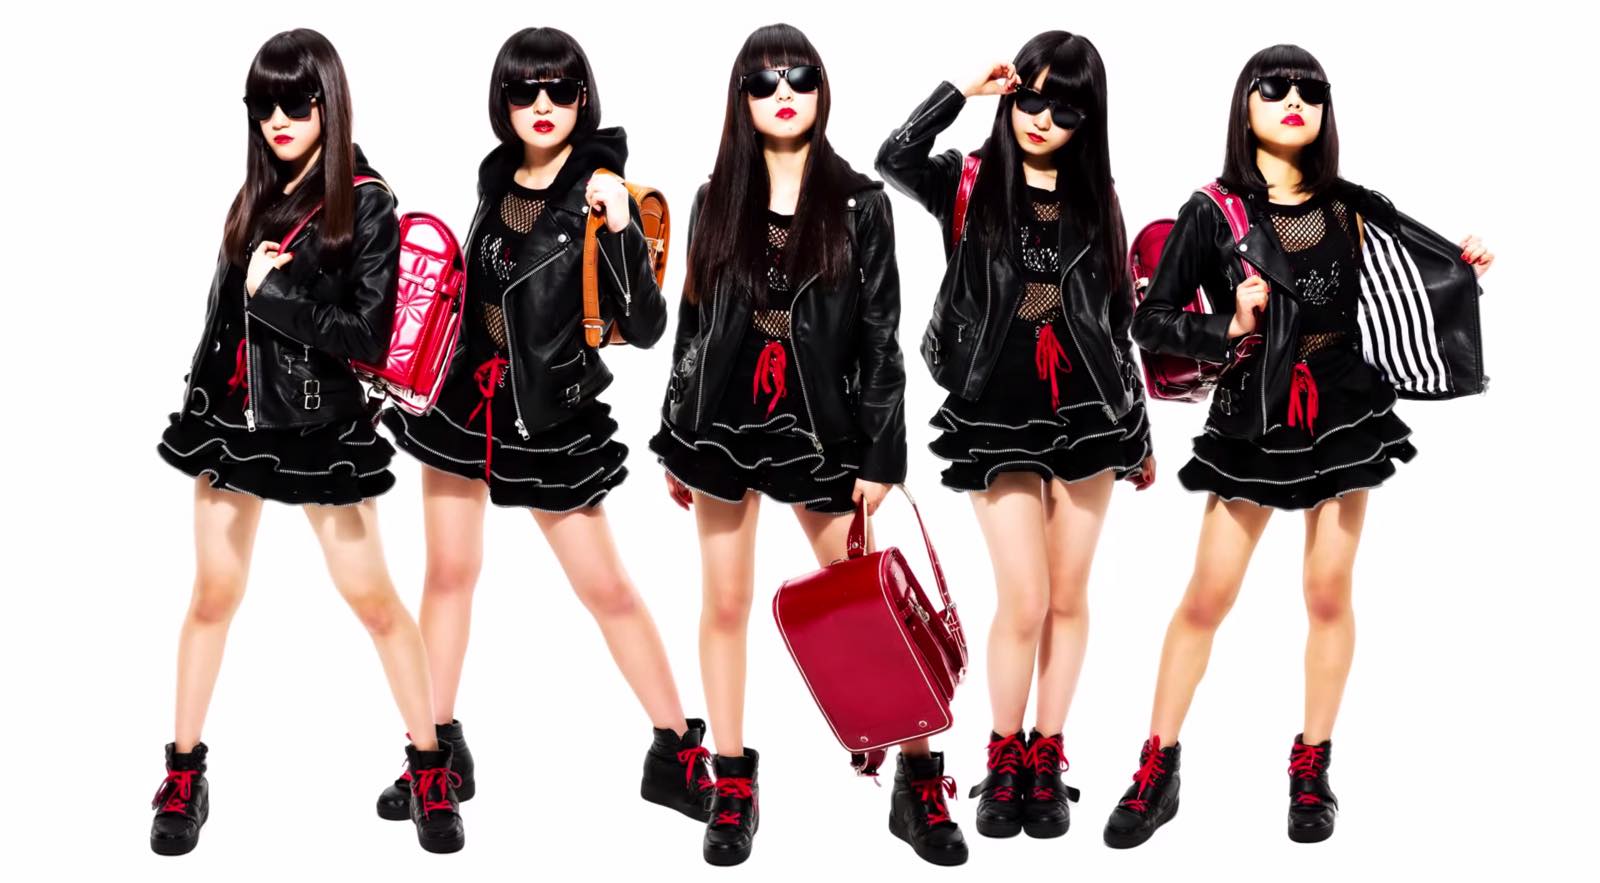 Randoseru! Sunglasses! Retro Rock! “Chame-Rock” Girls’ Group Maria Debut Single “Hurricane” Makes Landfall!